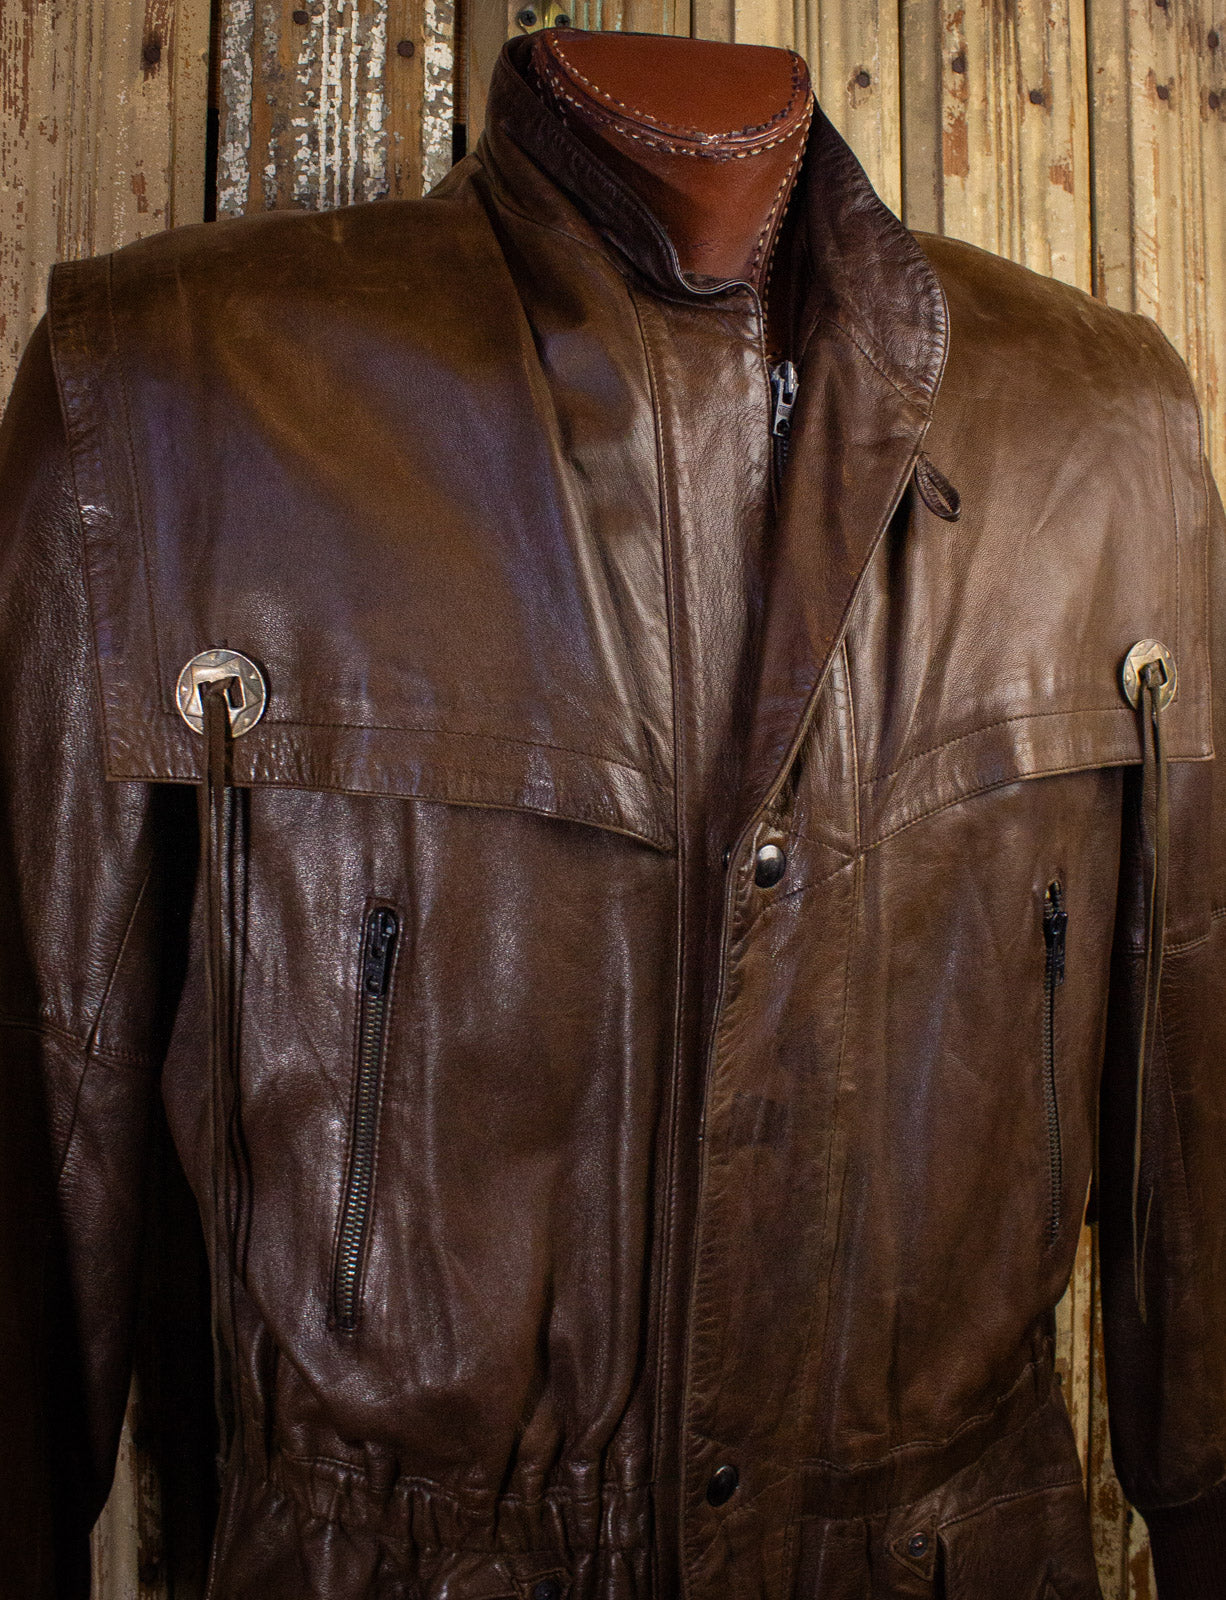 Vintage Brown Leather Jacket with Shoulder Flaps 80s XL